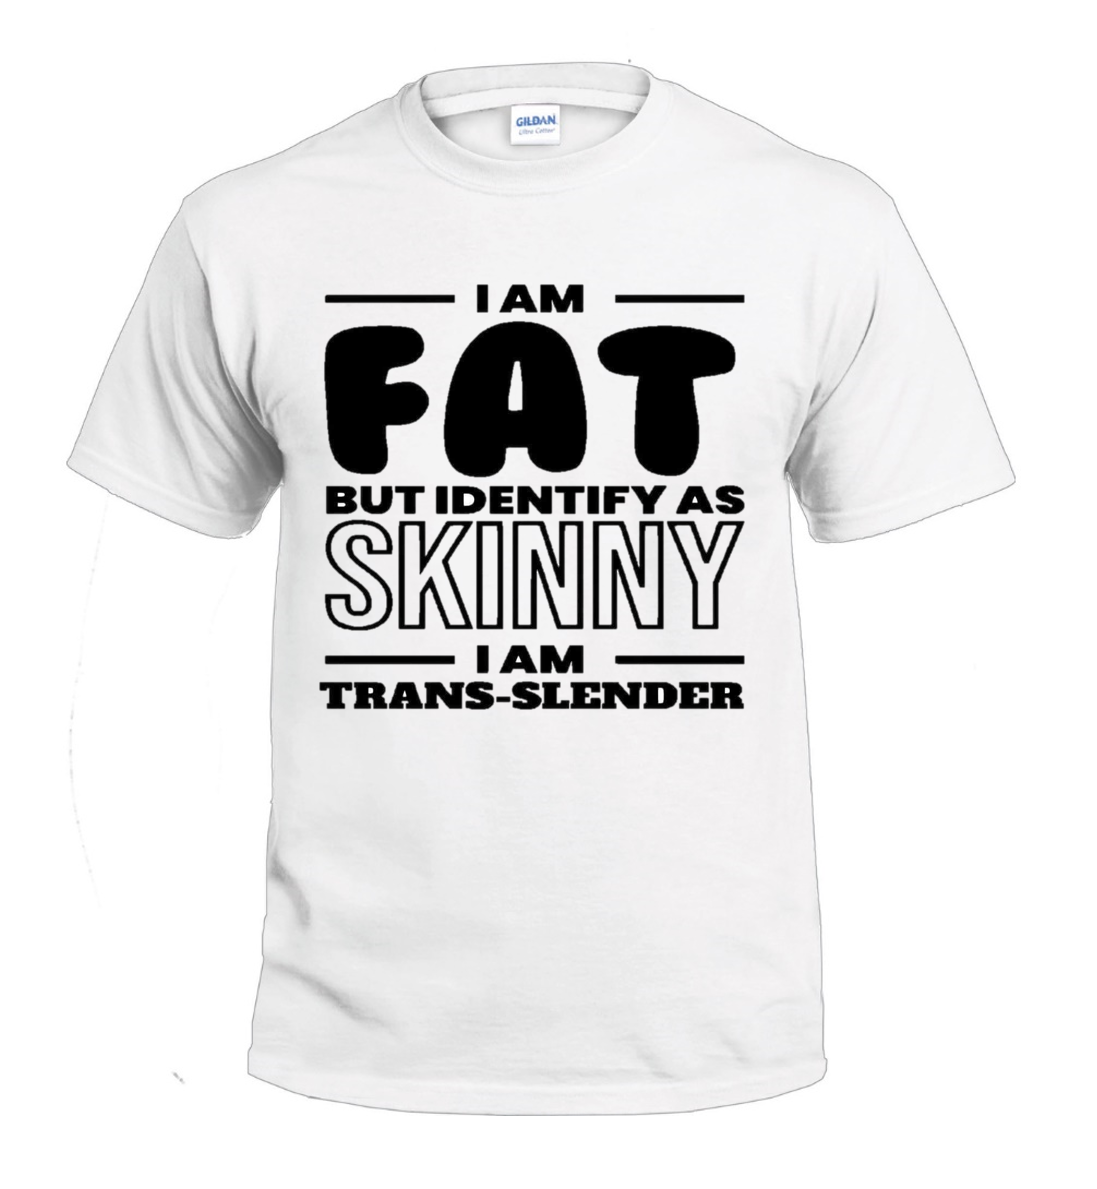 Trans-Slender t-shirt